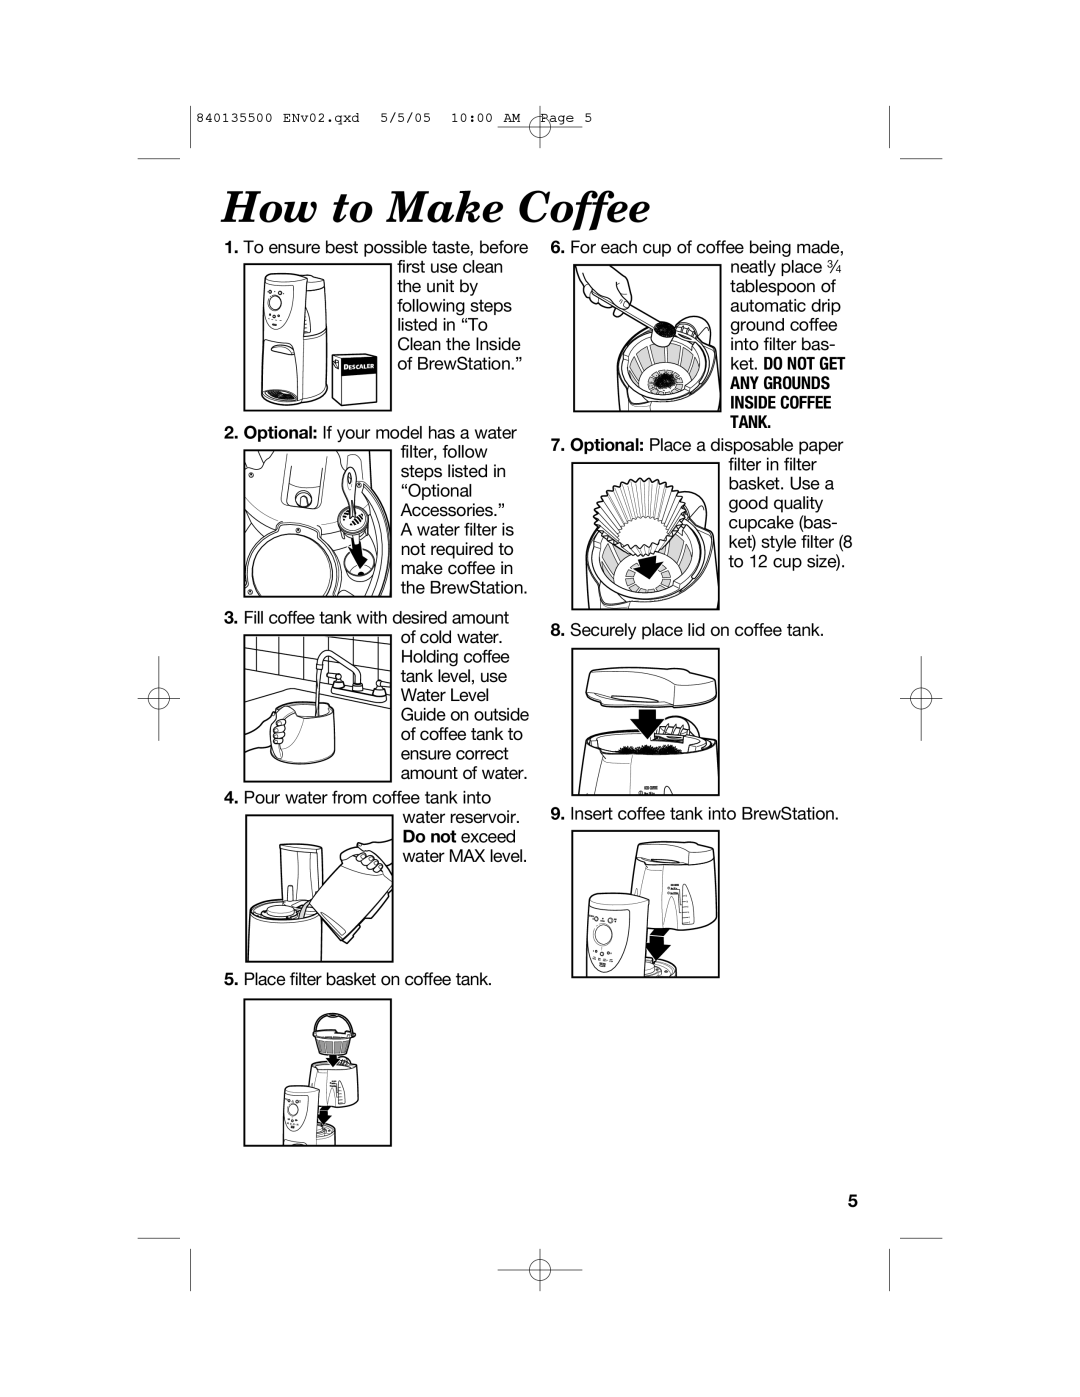 Hamilton Beach 47451 manual How to Make Coffee, Any Grounds Inside Coffee Tank 